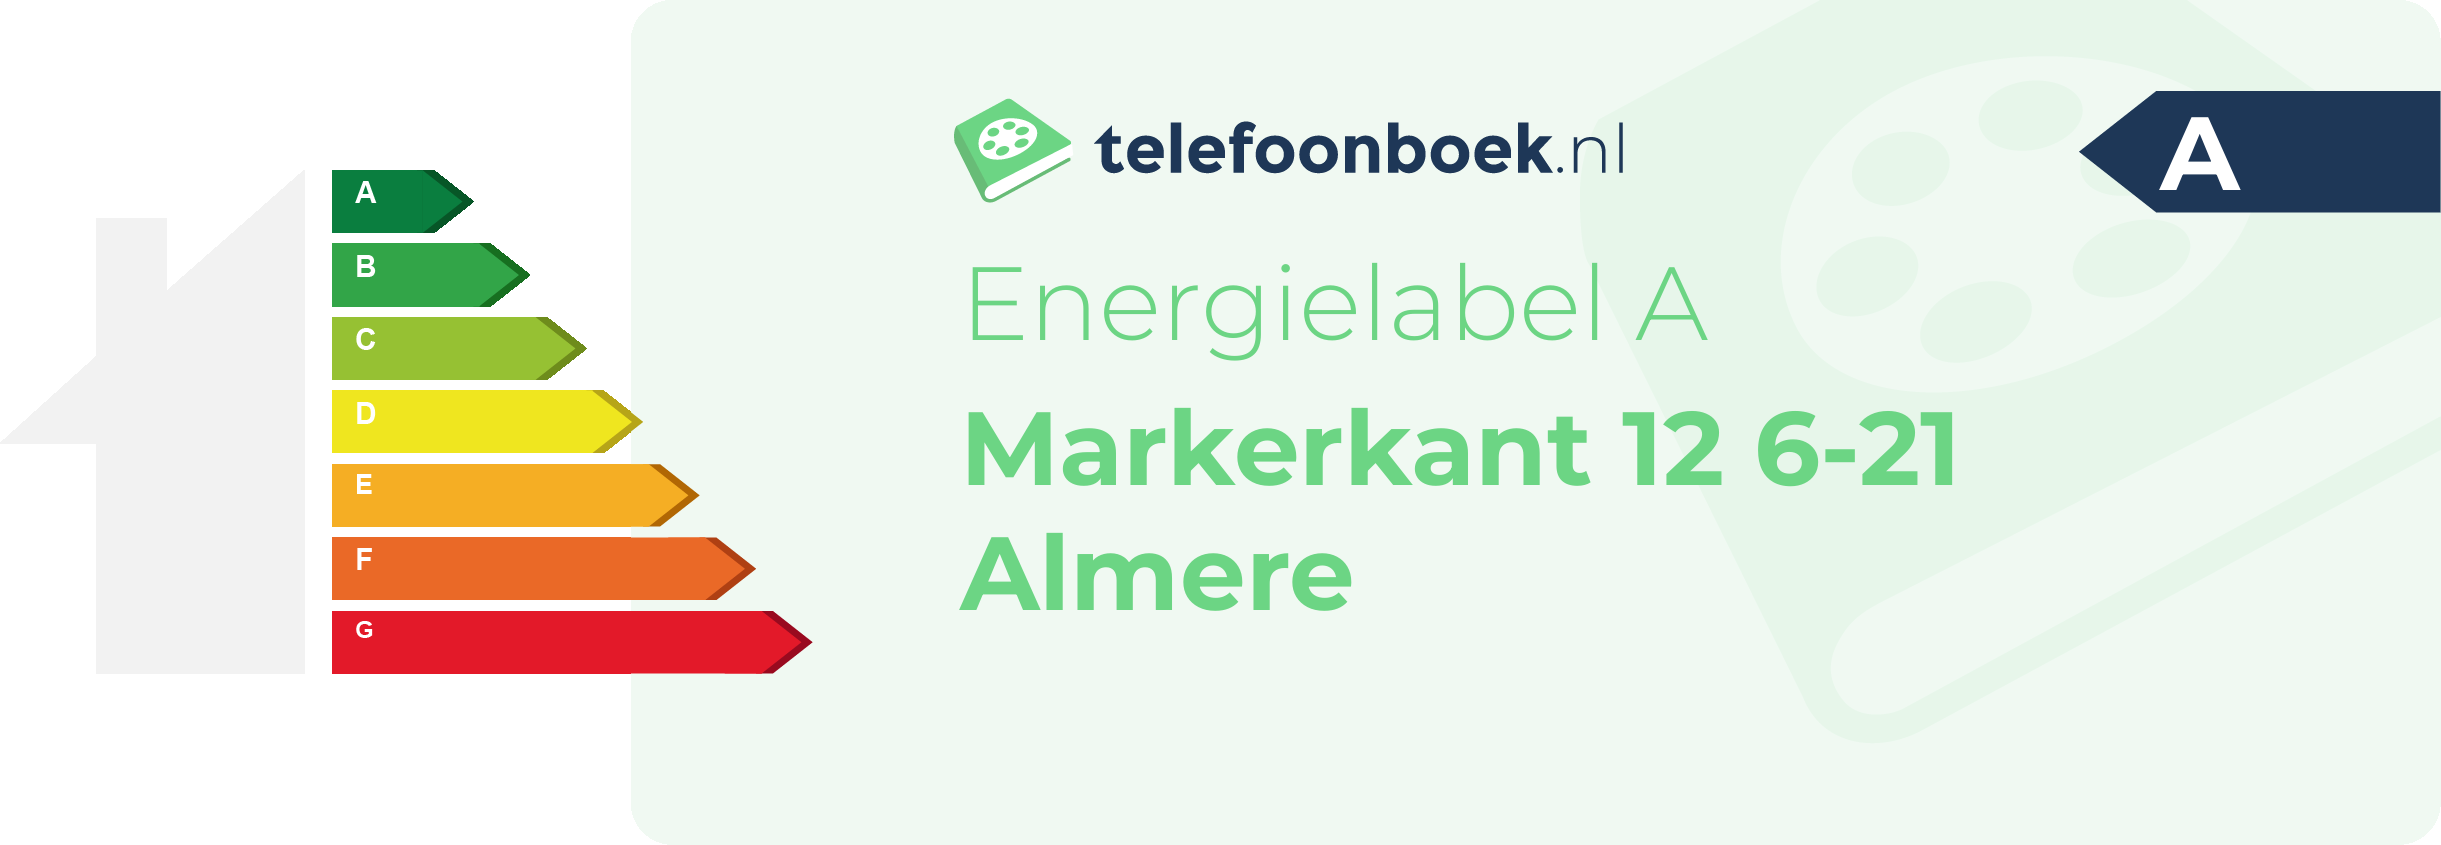 Energielabel Markerkant 12 6-21 Almere